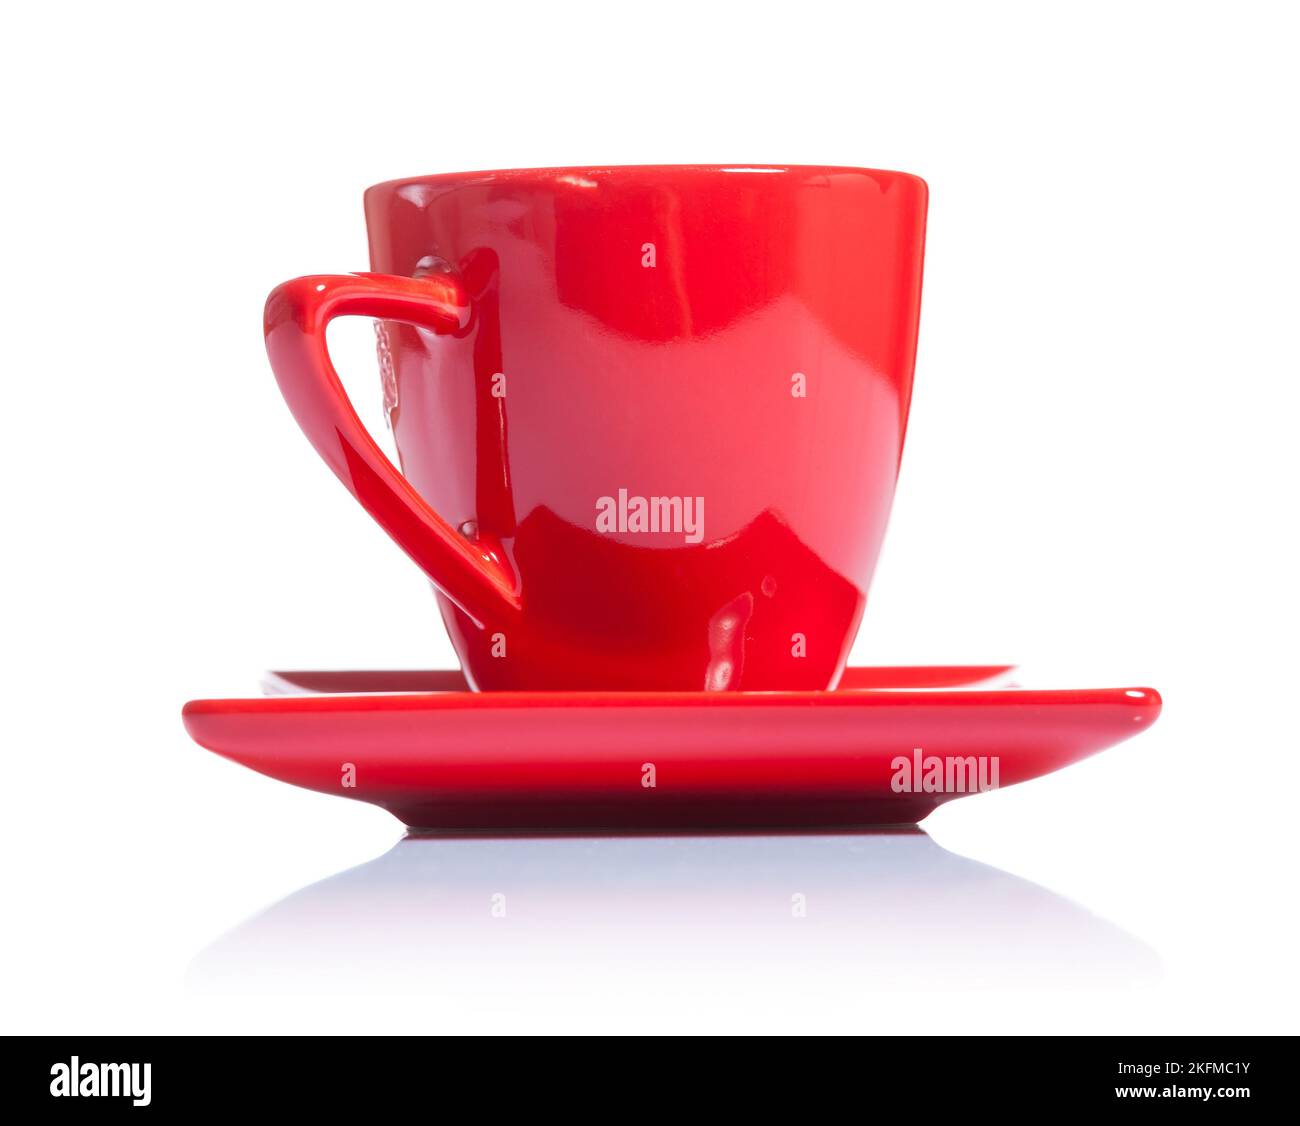 https://c8.alamy.com/comp/2KFMC1Y/red-coffee-cup-on-saucer-isolated-2KFMC1Y.jpg